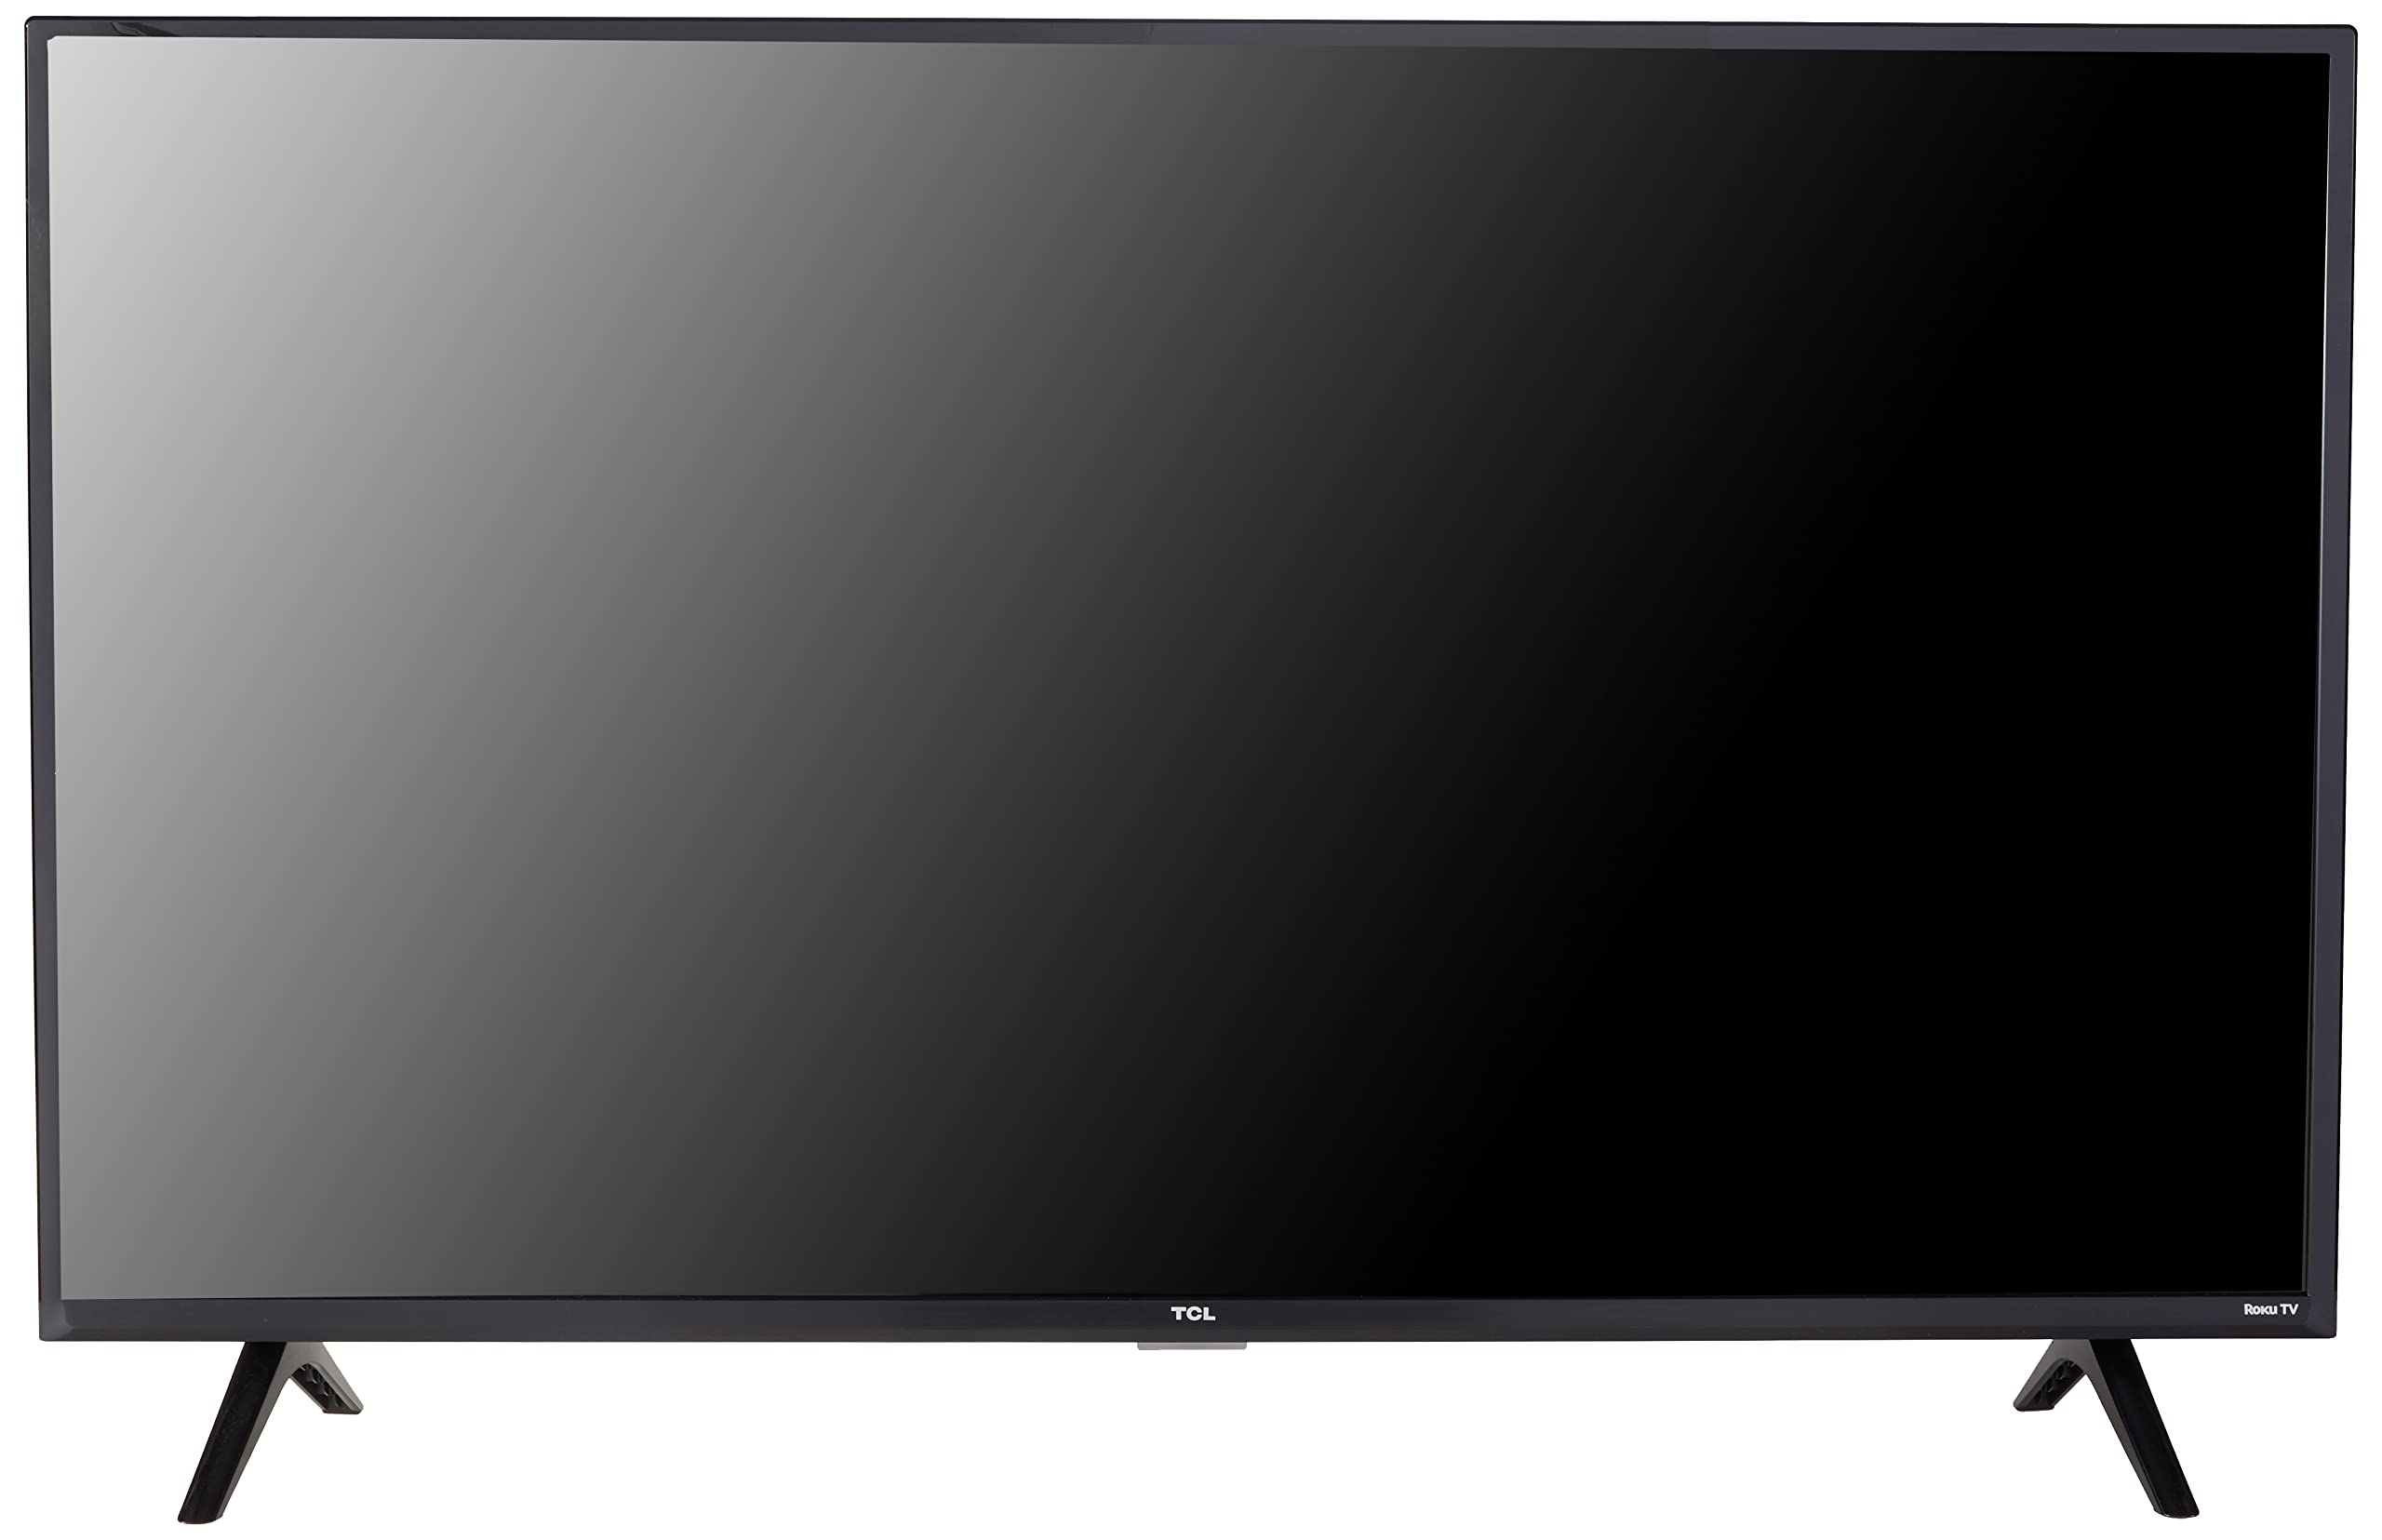 TCL Téléviseur Roku intelligent à DEL Full HD 1080p de classe 3 de 40 pi - 40S355